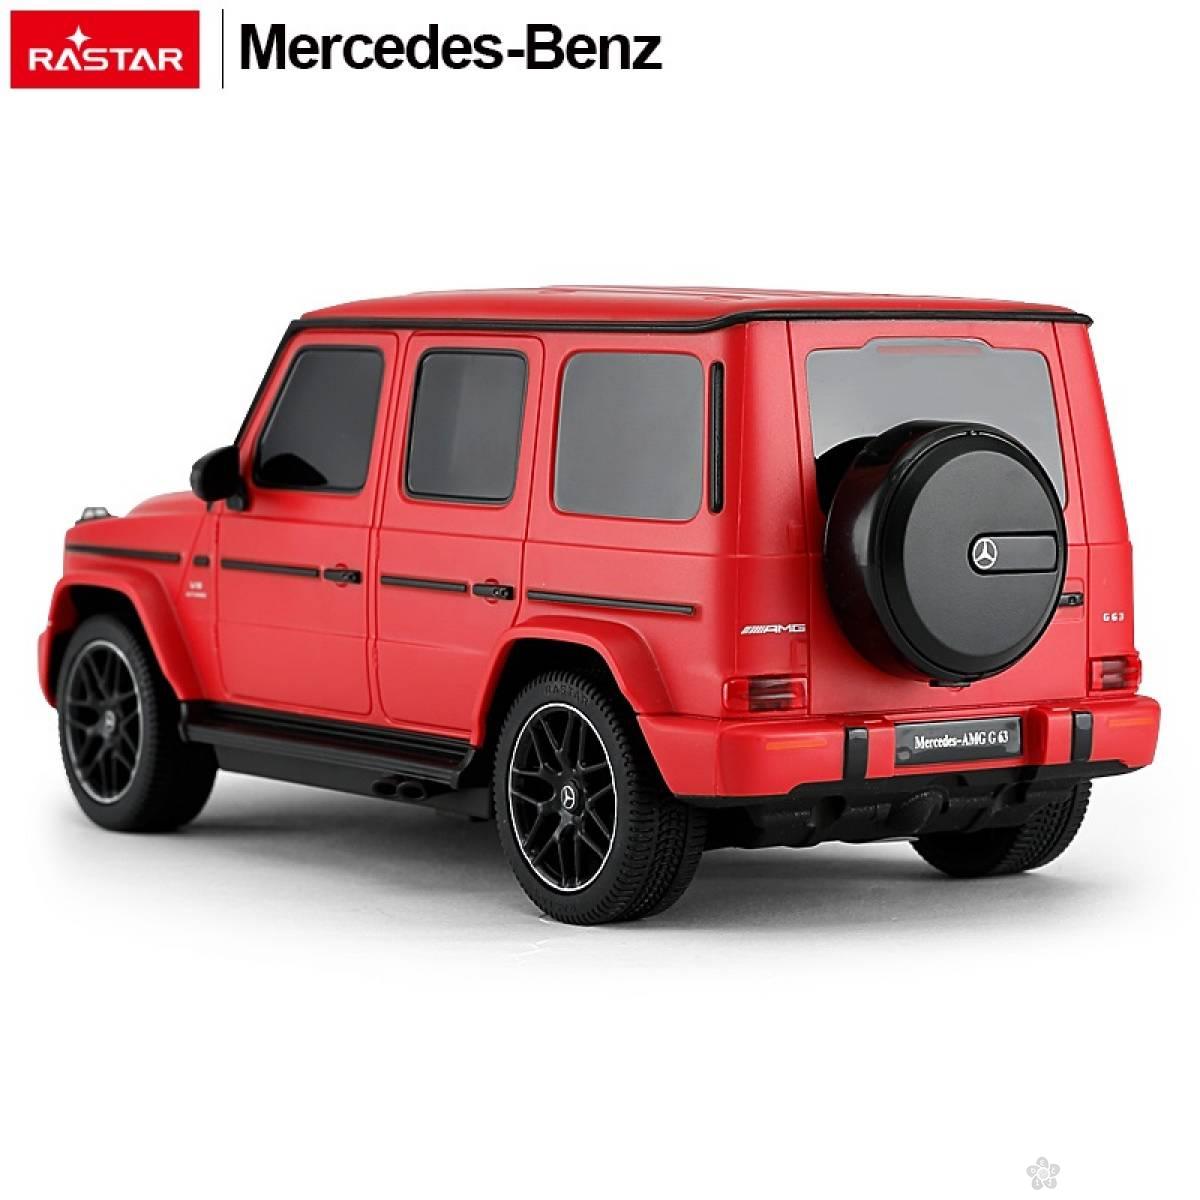 R/C Rastar 1:24 Mercedes Benz G63 53/95800 